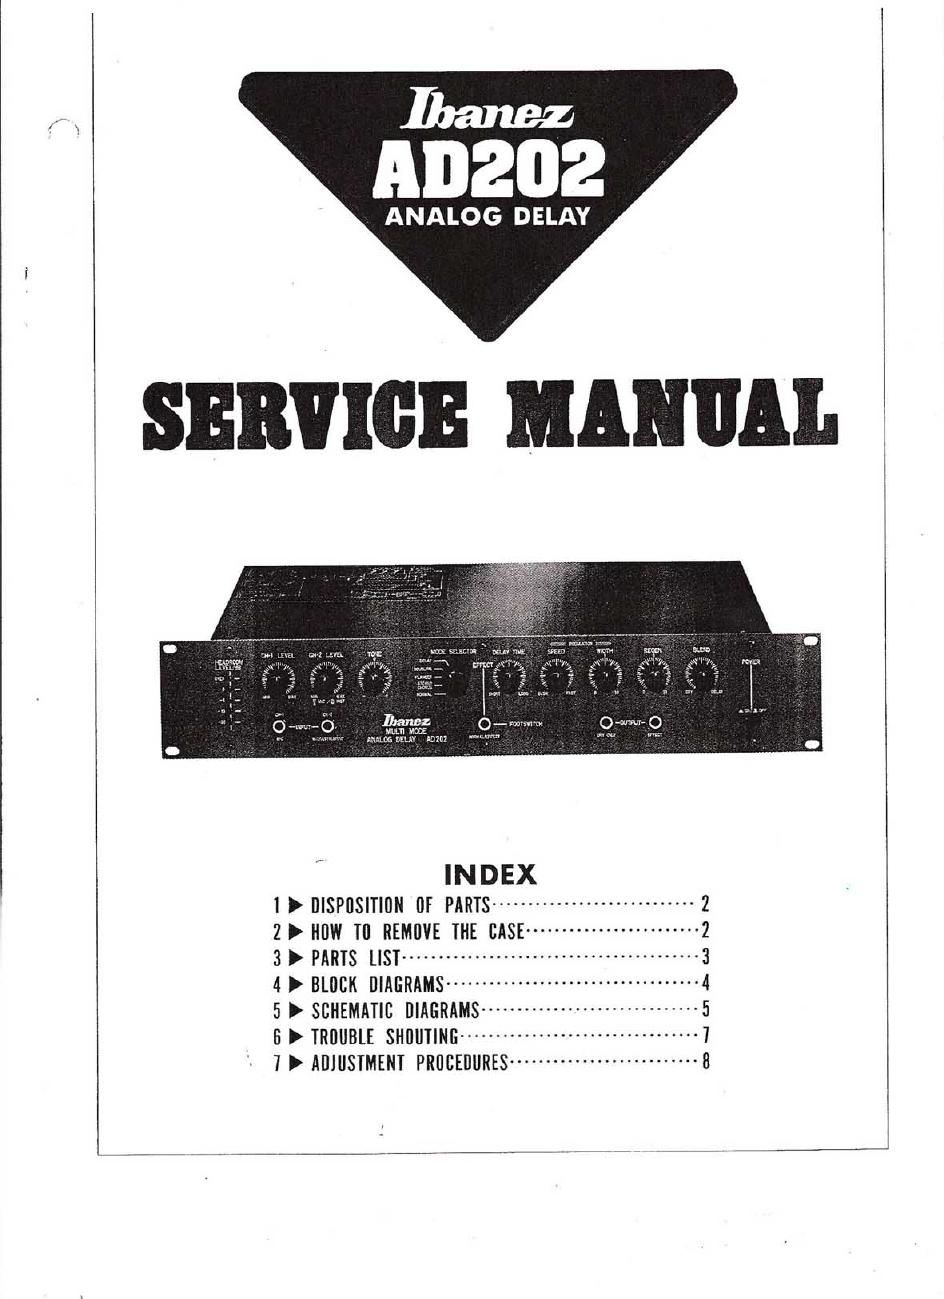 Ibanez AD 202 Service Manual